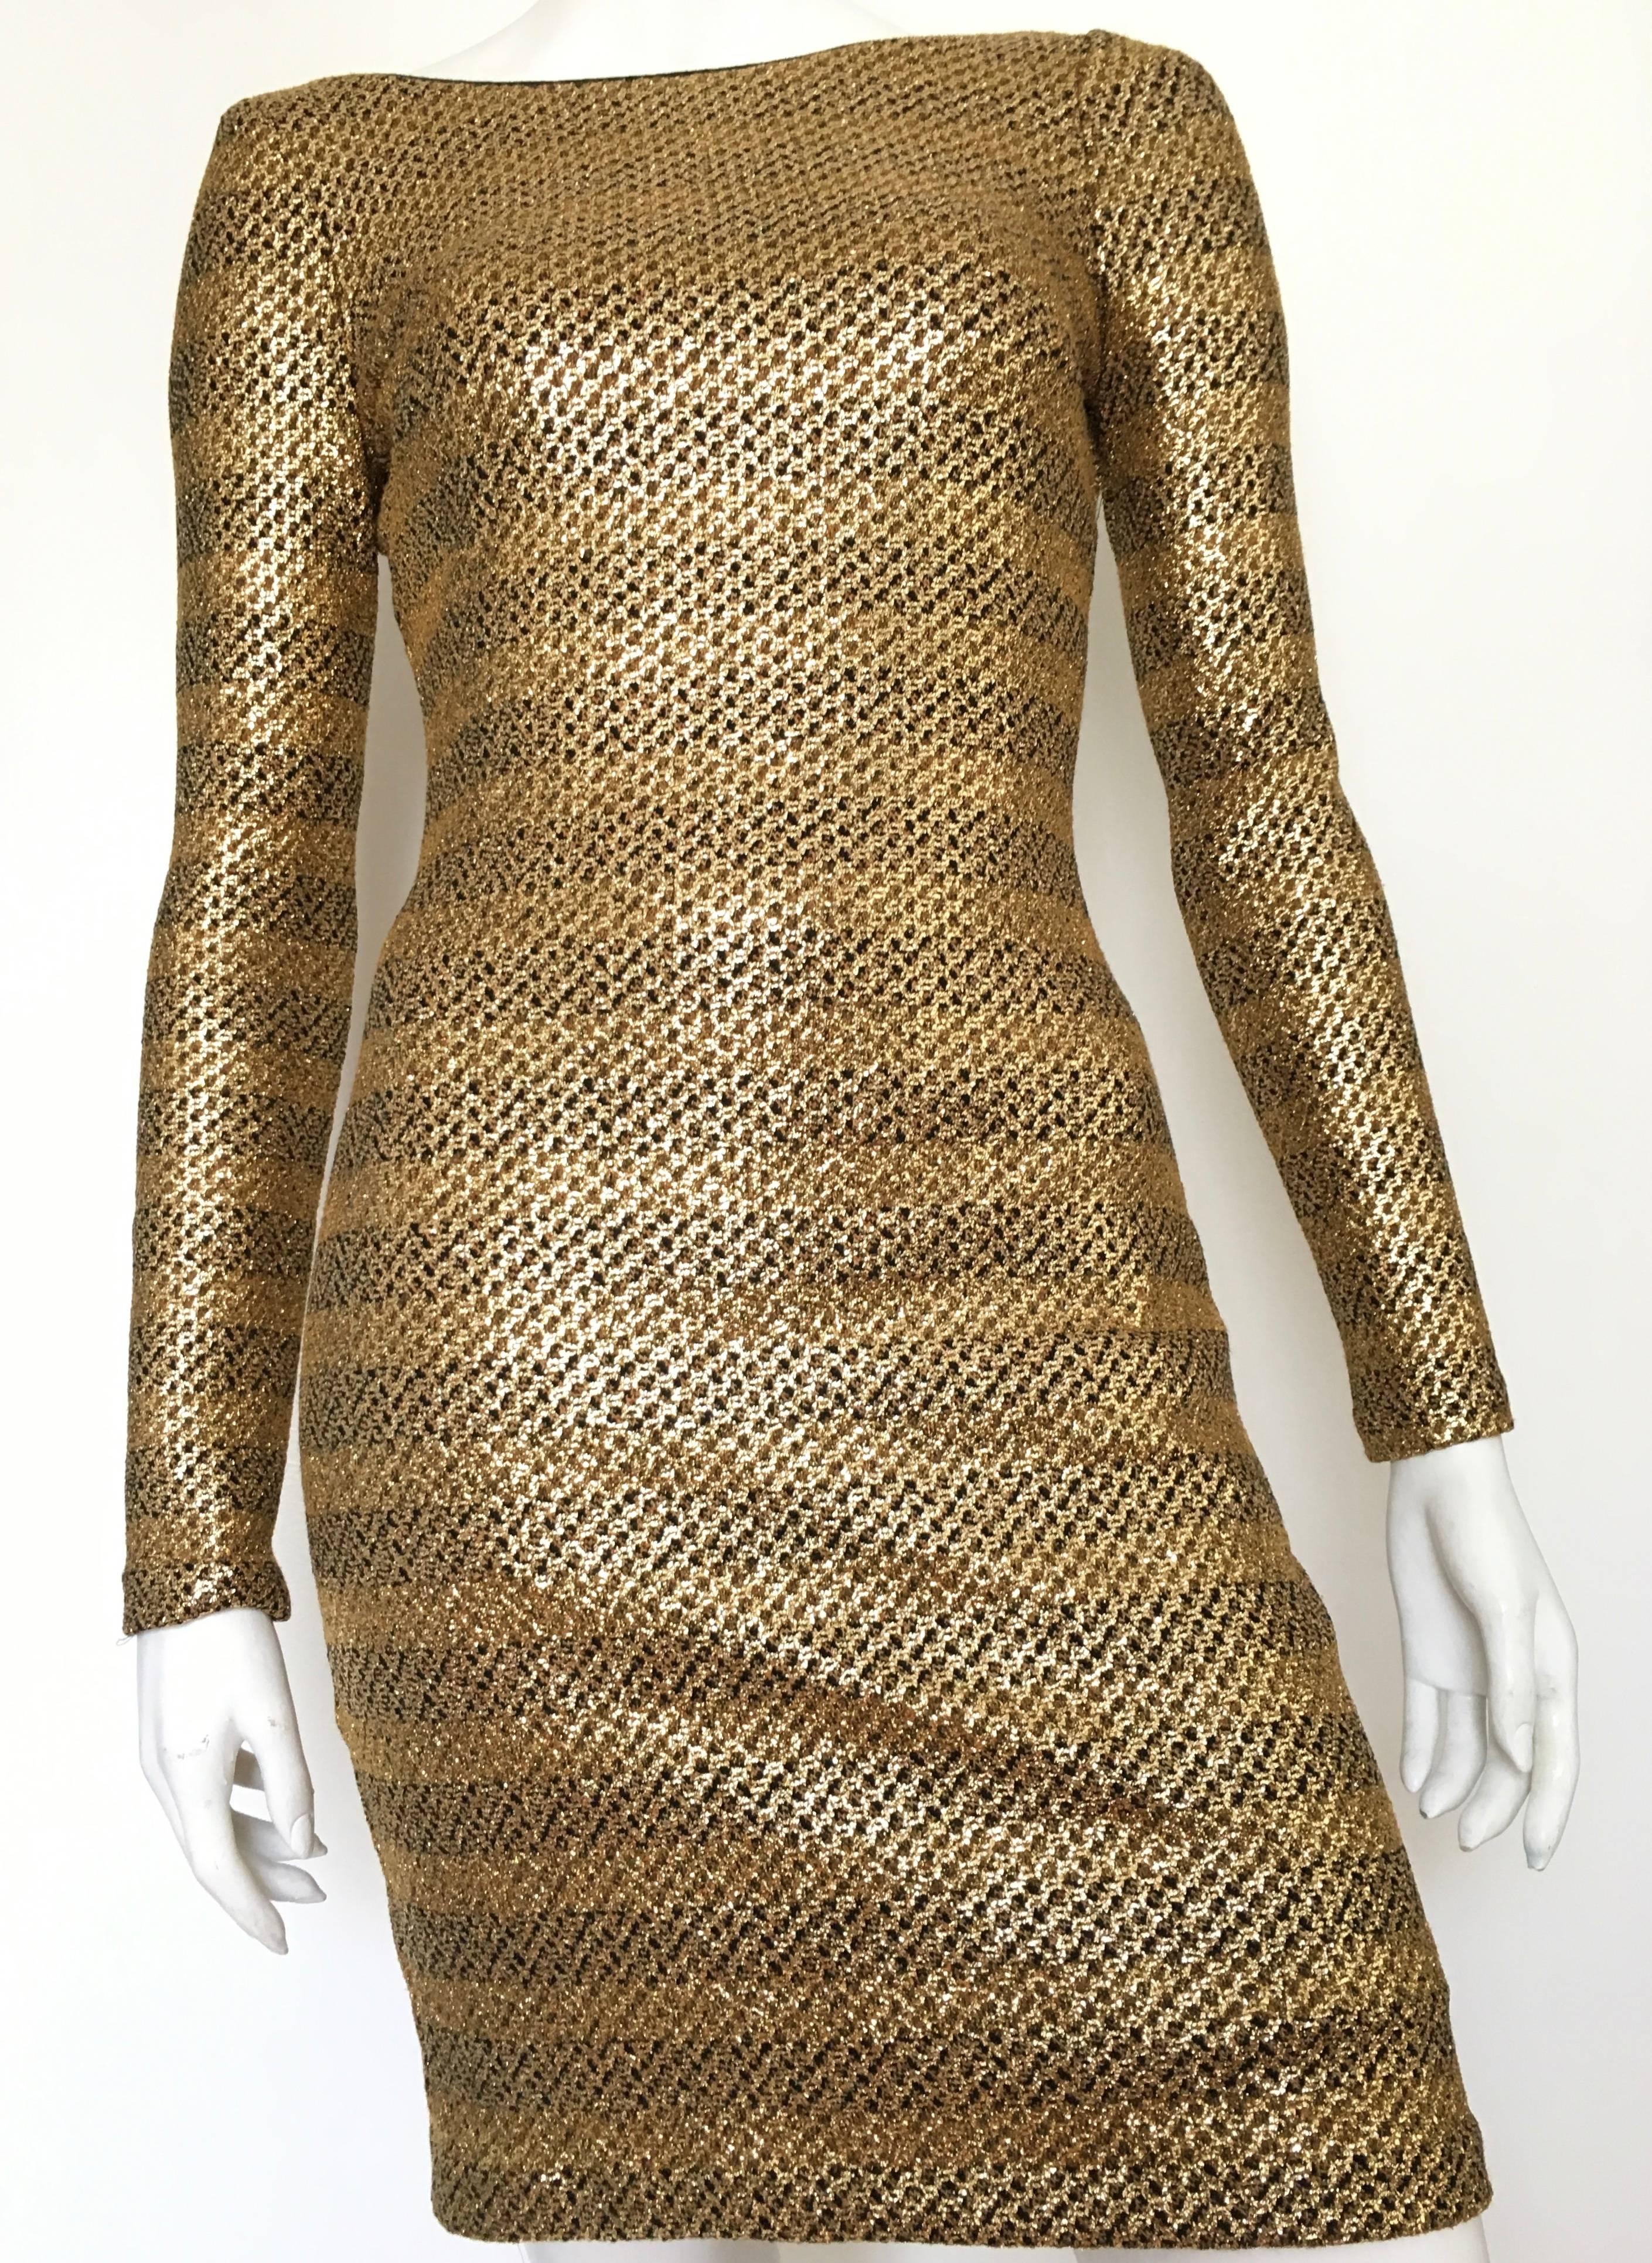 Badgley Mischka Gold Metallic Stretch Cocktail Dress Size 2 / 4. For Sale 4